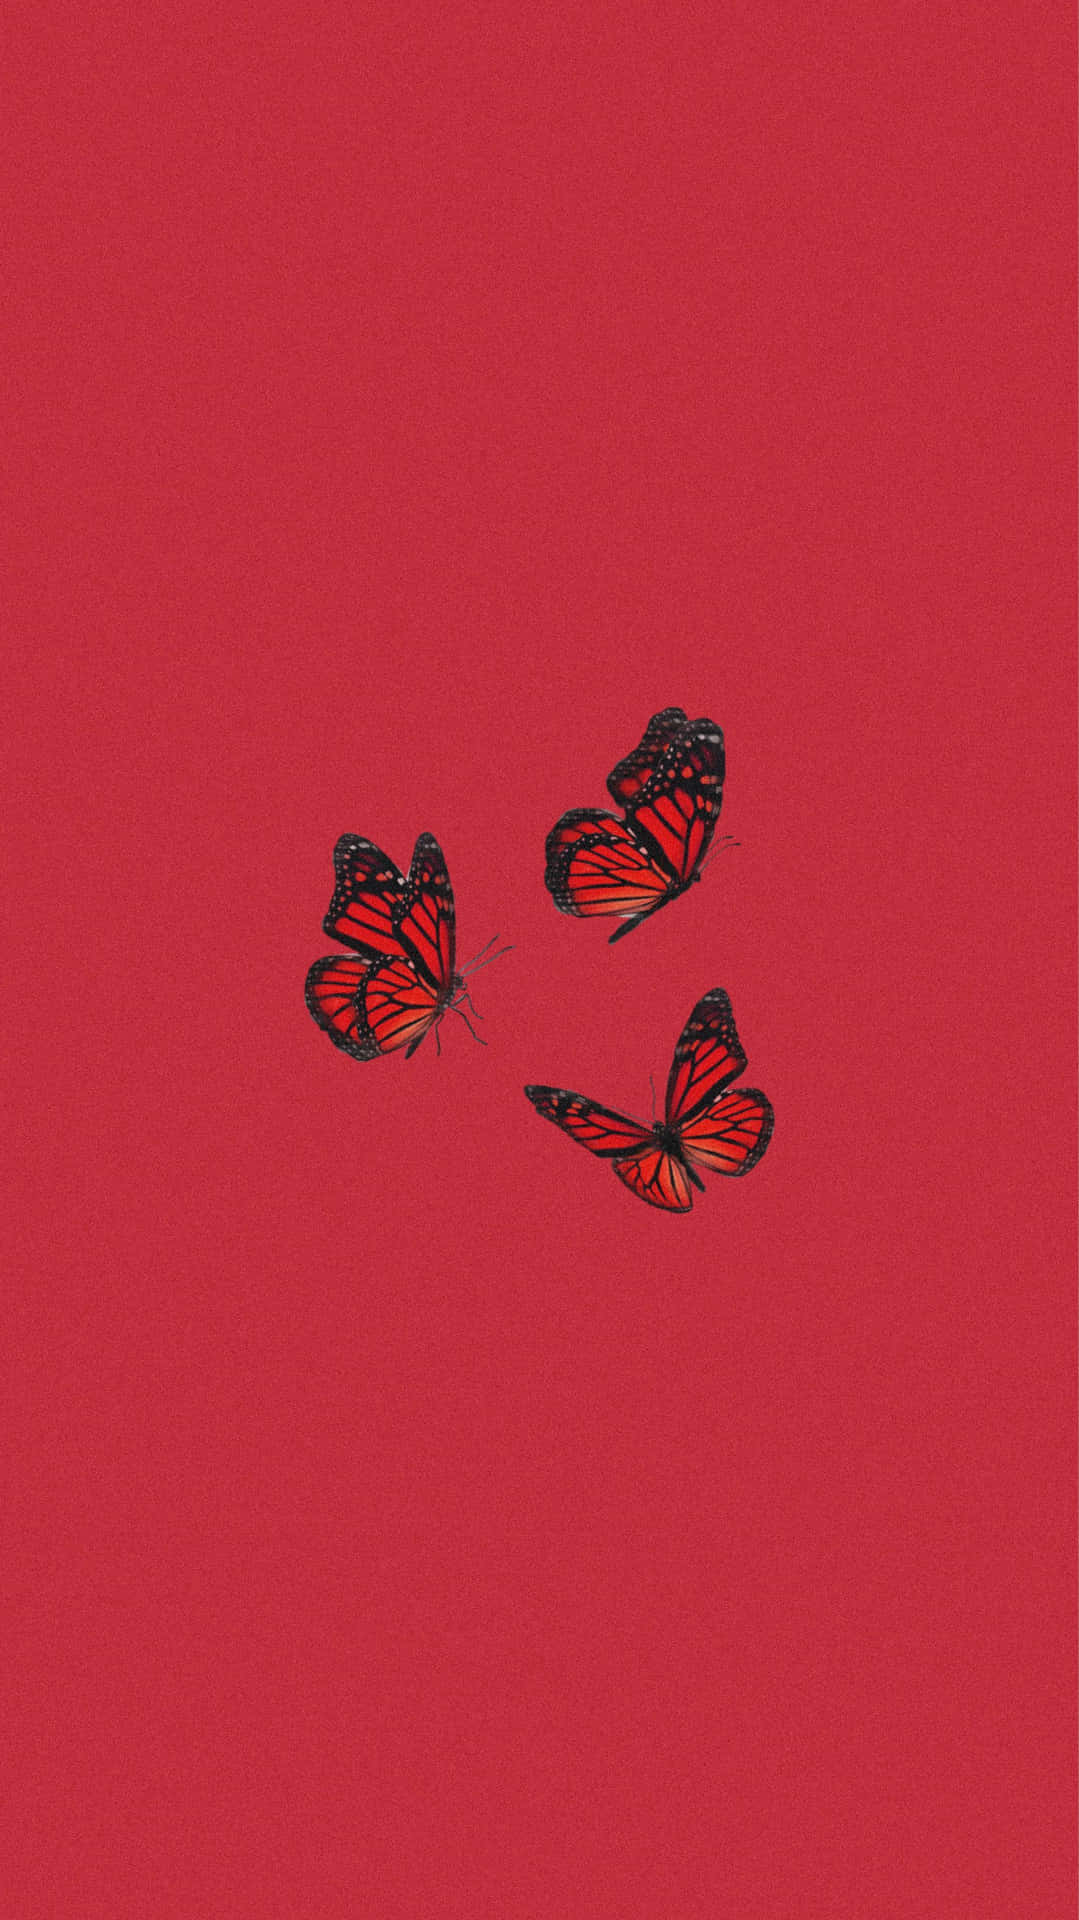 Red Butterfly Minimalist Design Wallpaper